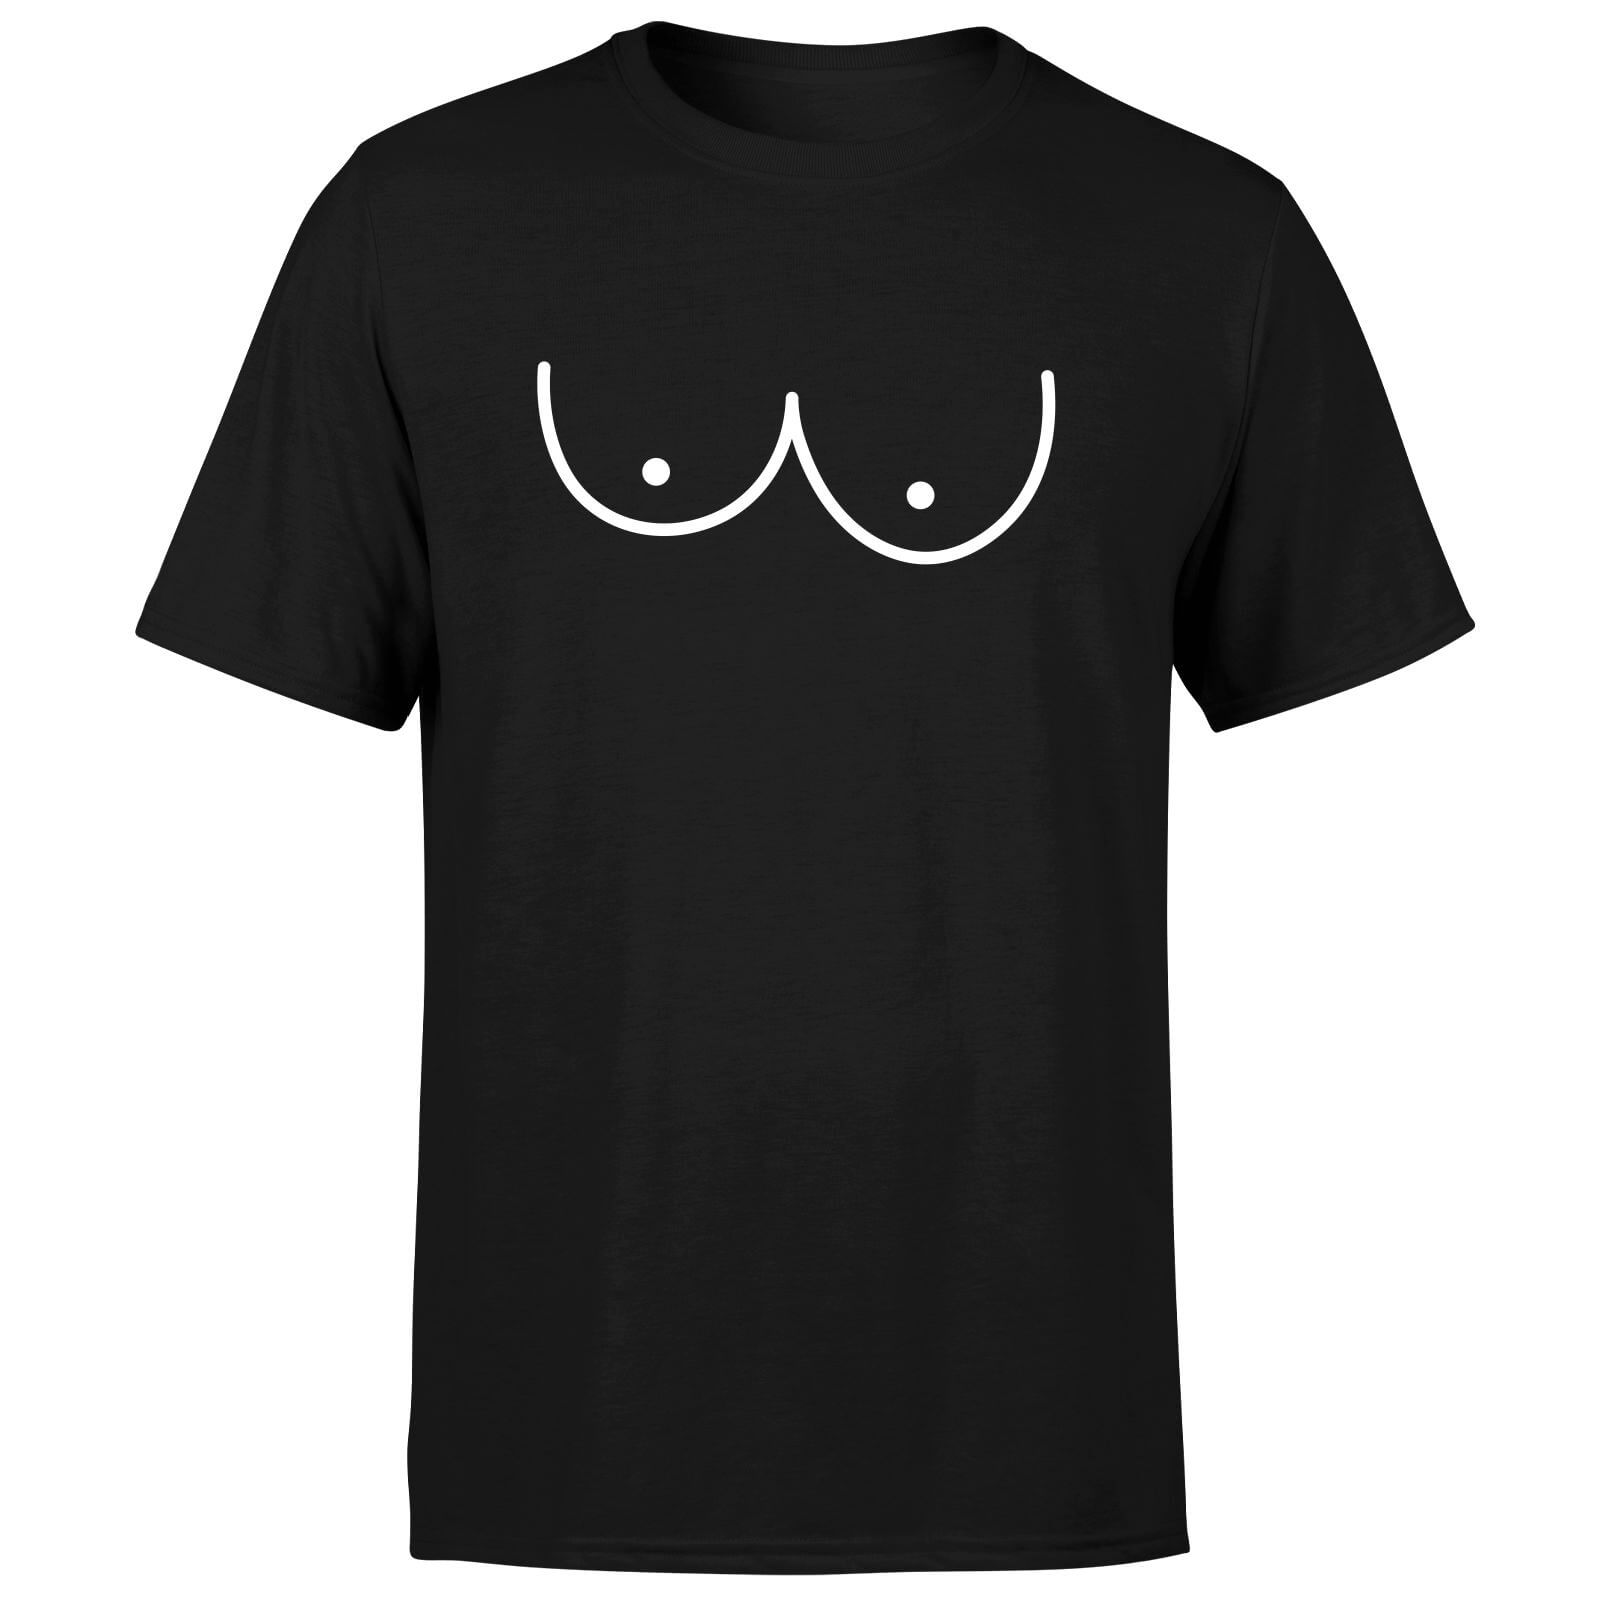 Lovely Hooters Men's T-Shirt - Black - XS